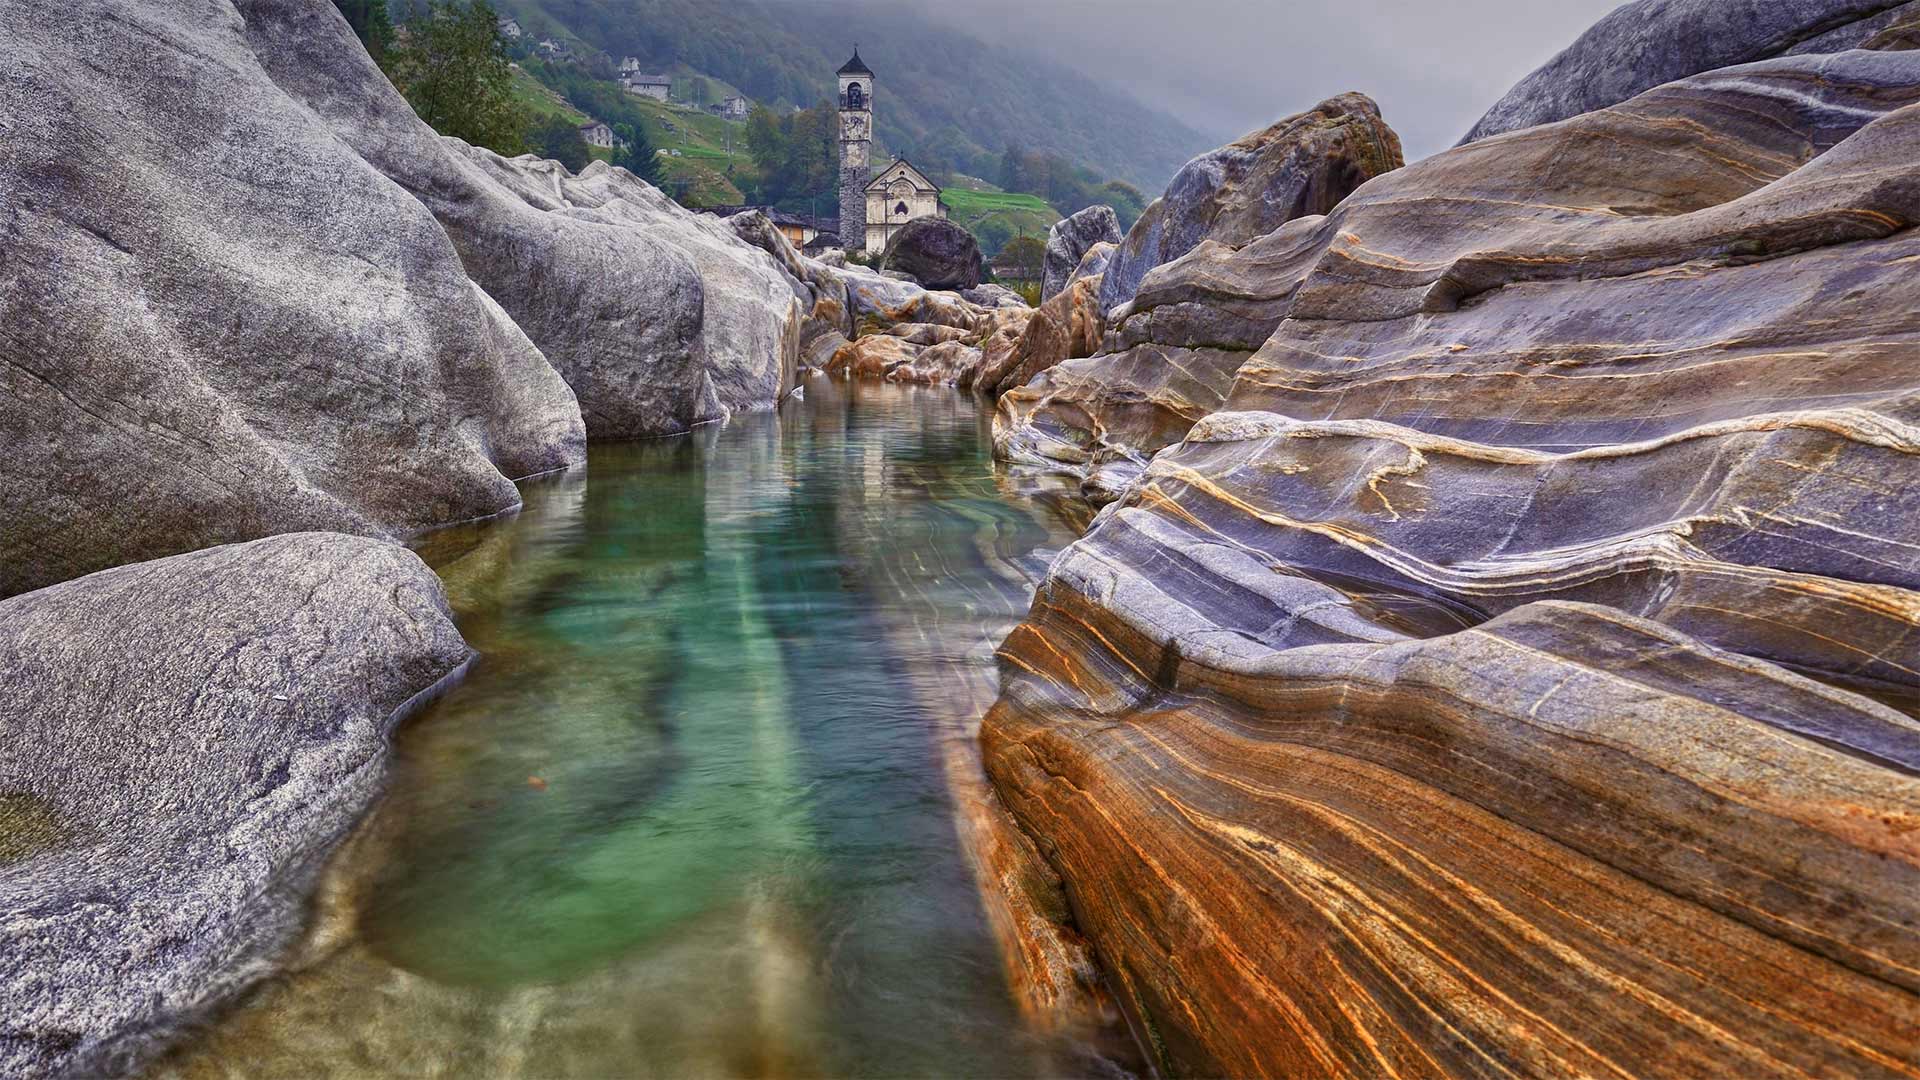 Rocks in the Verzasca River near the hamlet of Lavertezzo in the Valle Verzasca of Switzerland - Robert Seitz/Offset by Shutterstock)